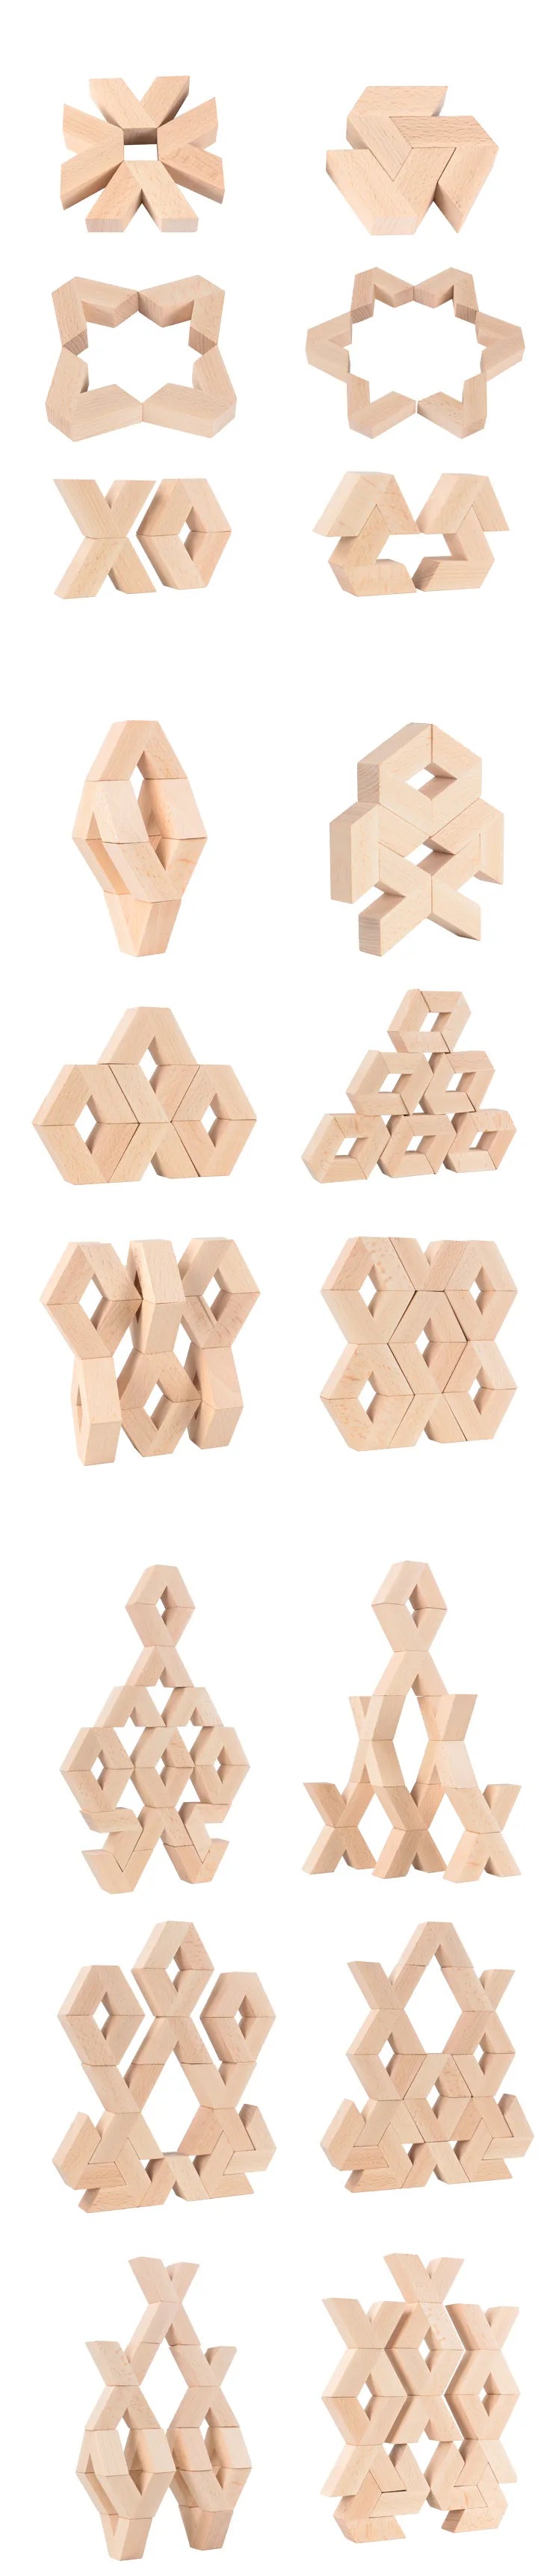 Quality V shape Wooden Building Blocks - HAPPY GUMNUT